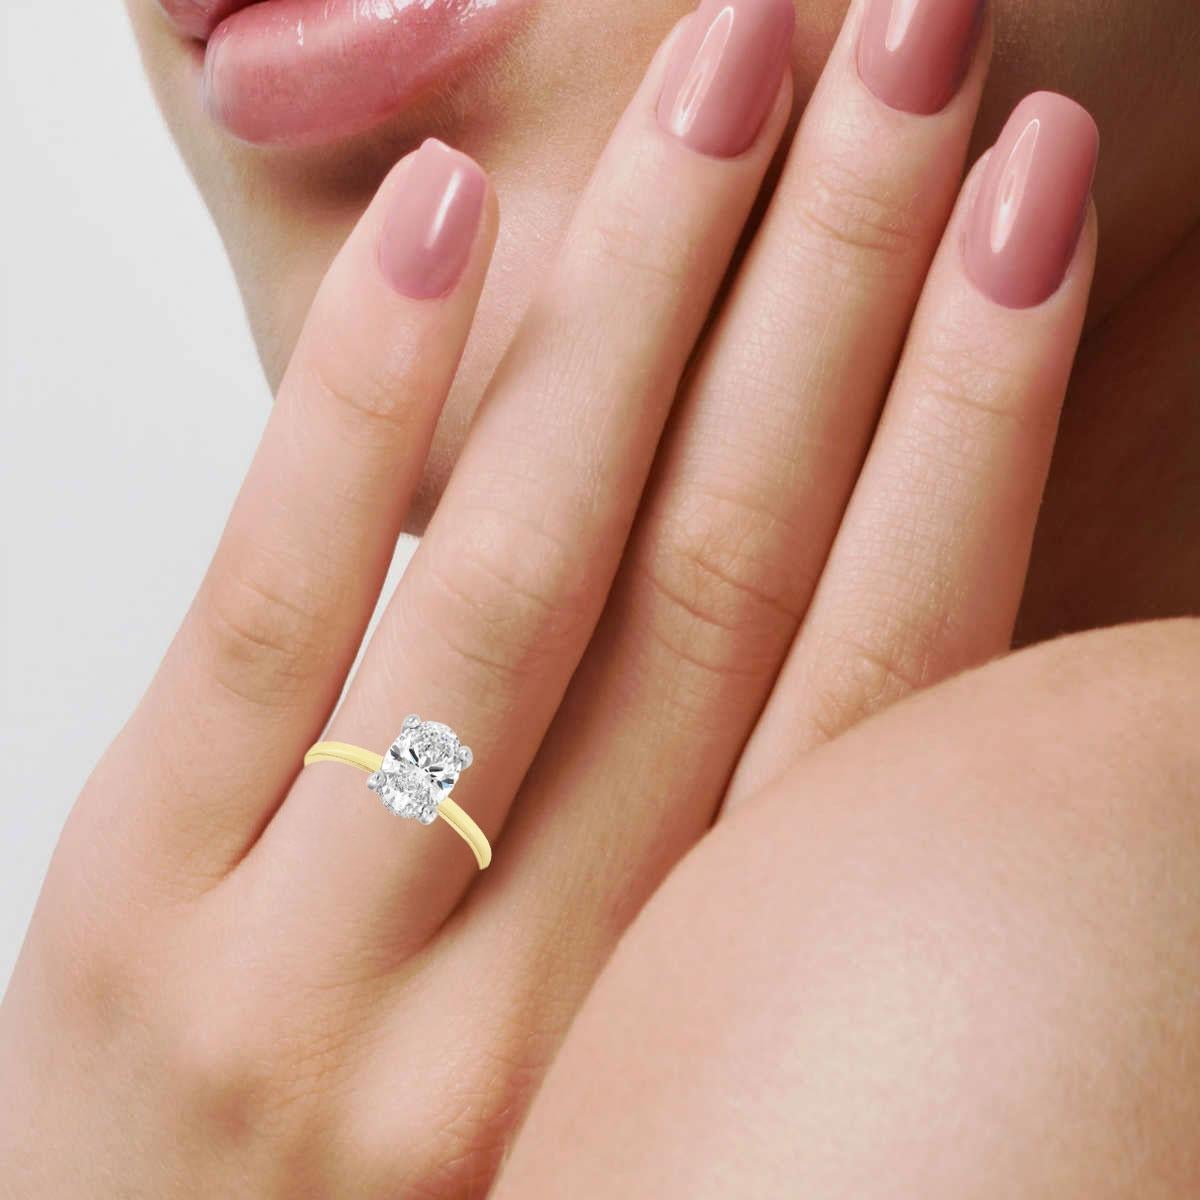 1.5 carat oval diamond ring with halo